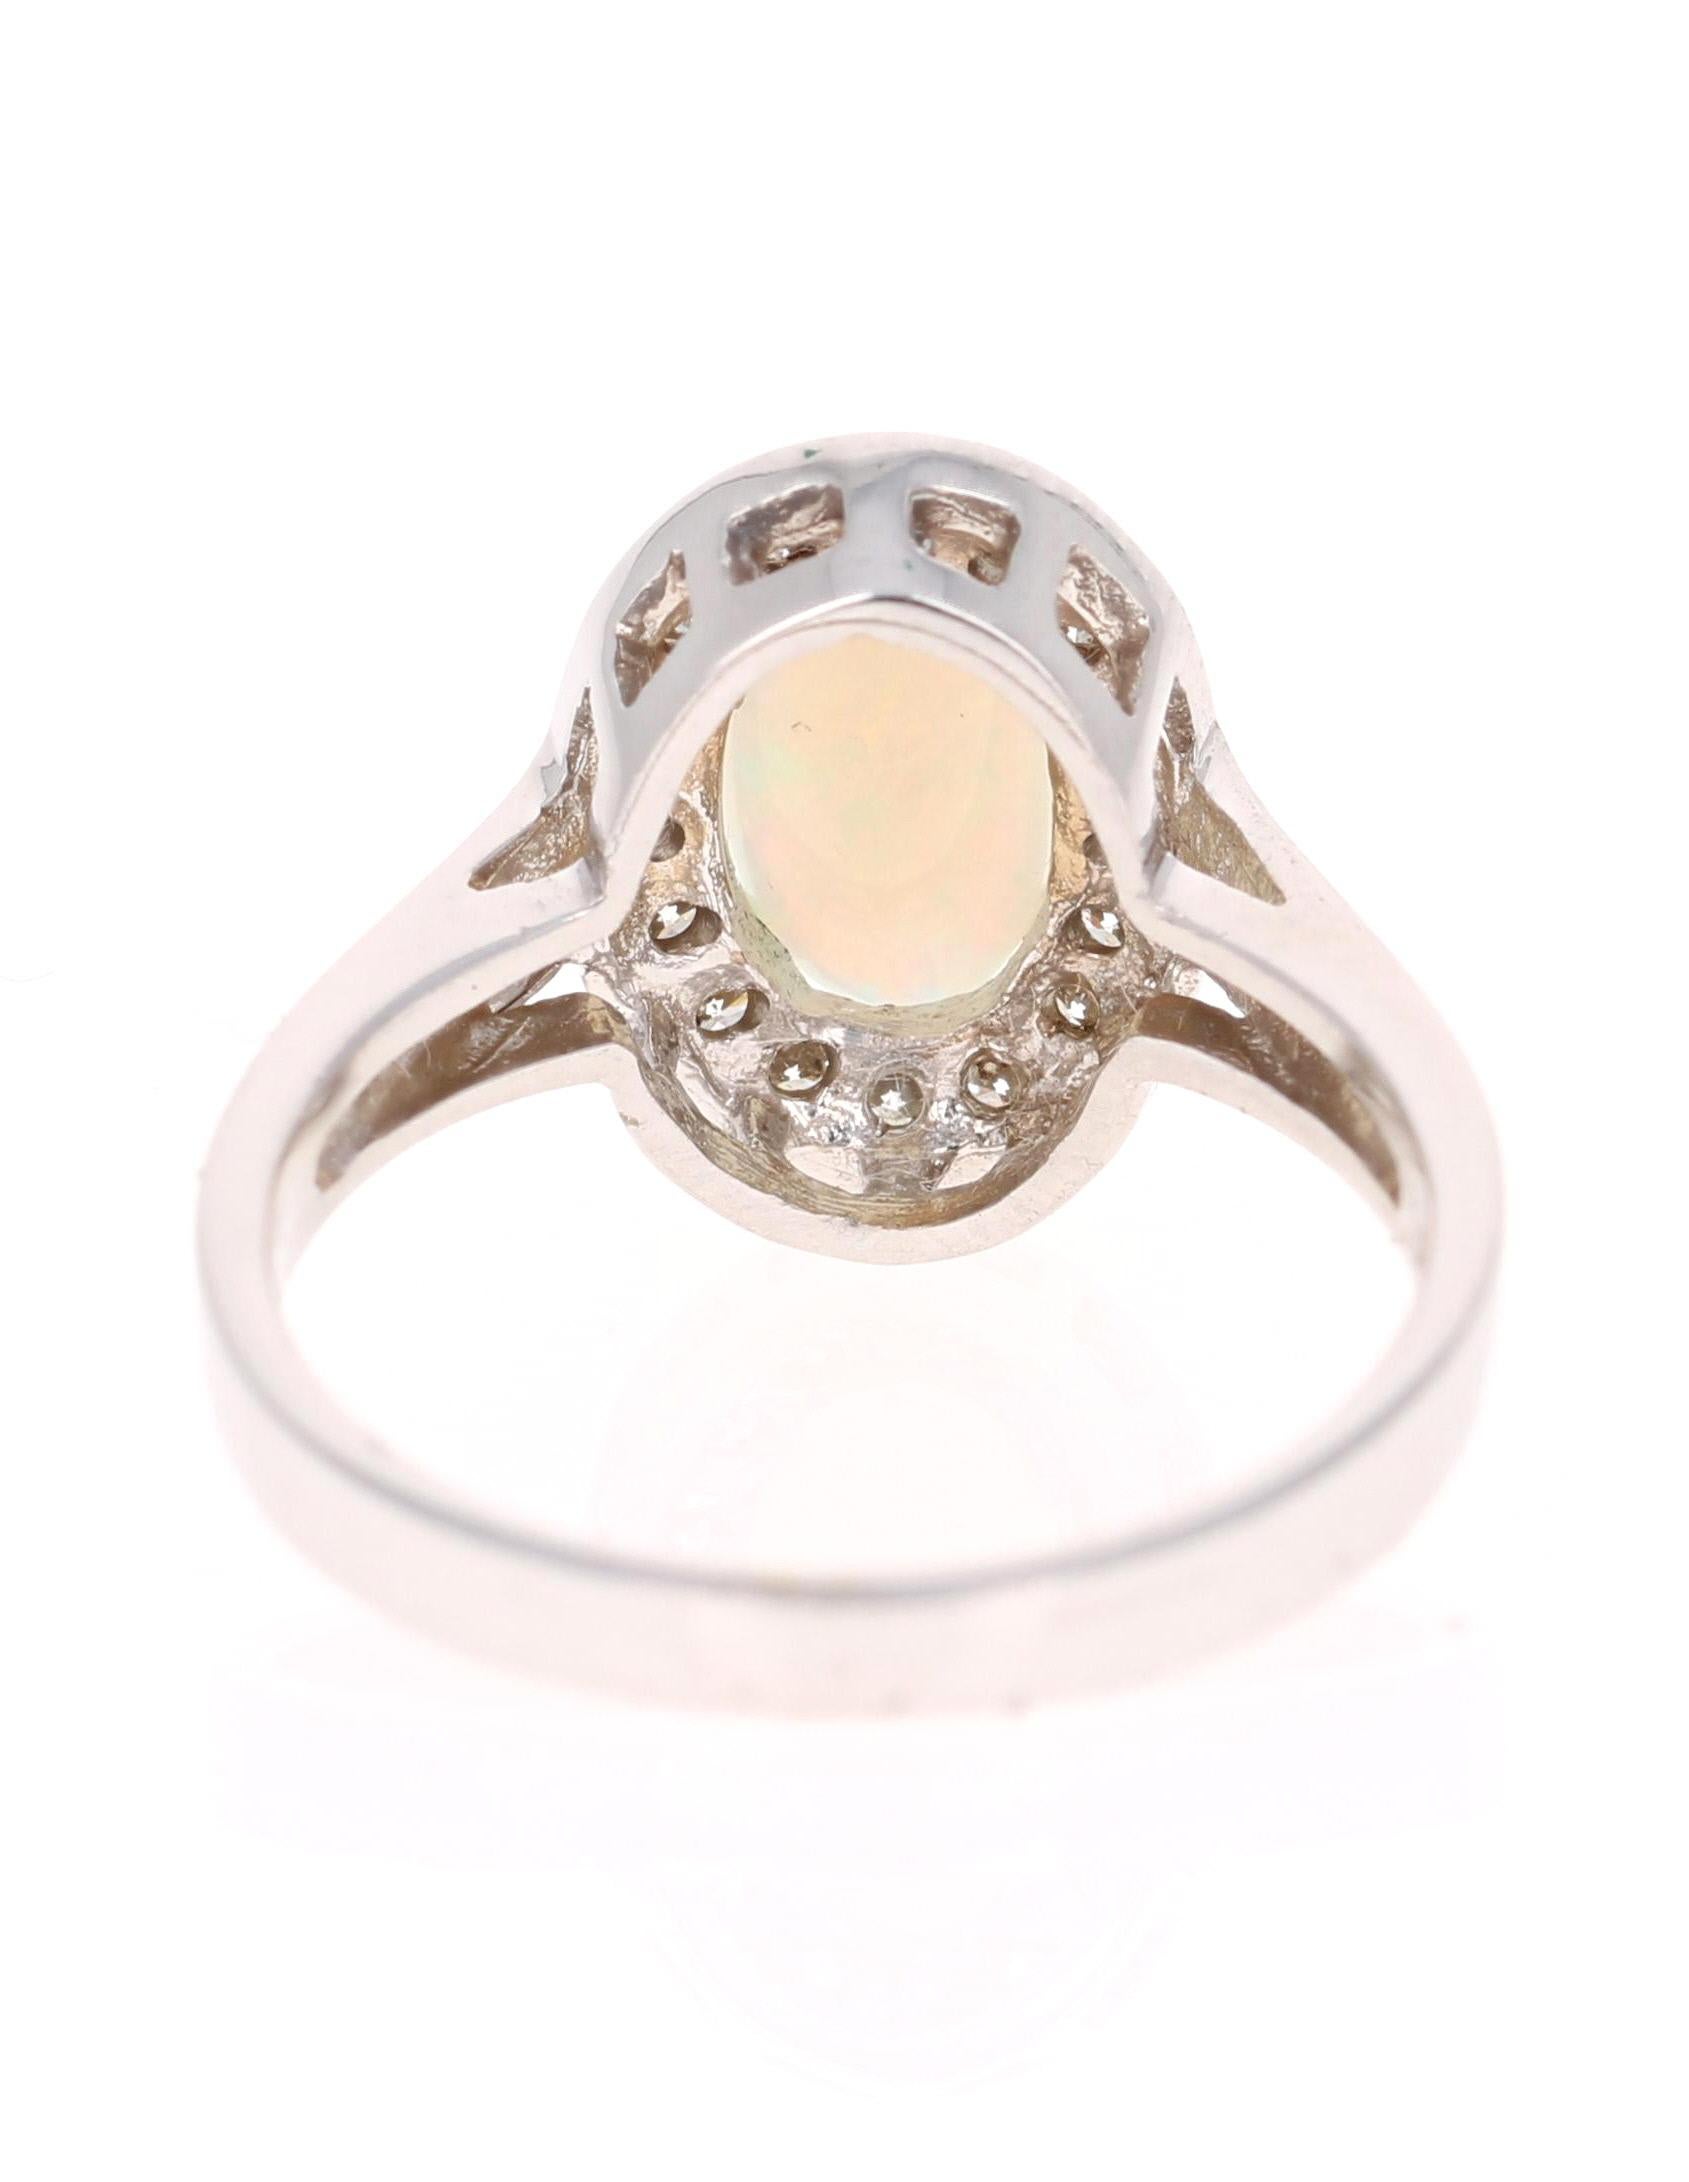 Oval Cut 1.48 Carat Opal Diamond 14 Karat White Gold Ring